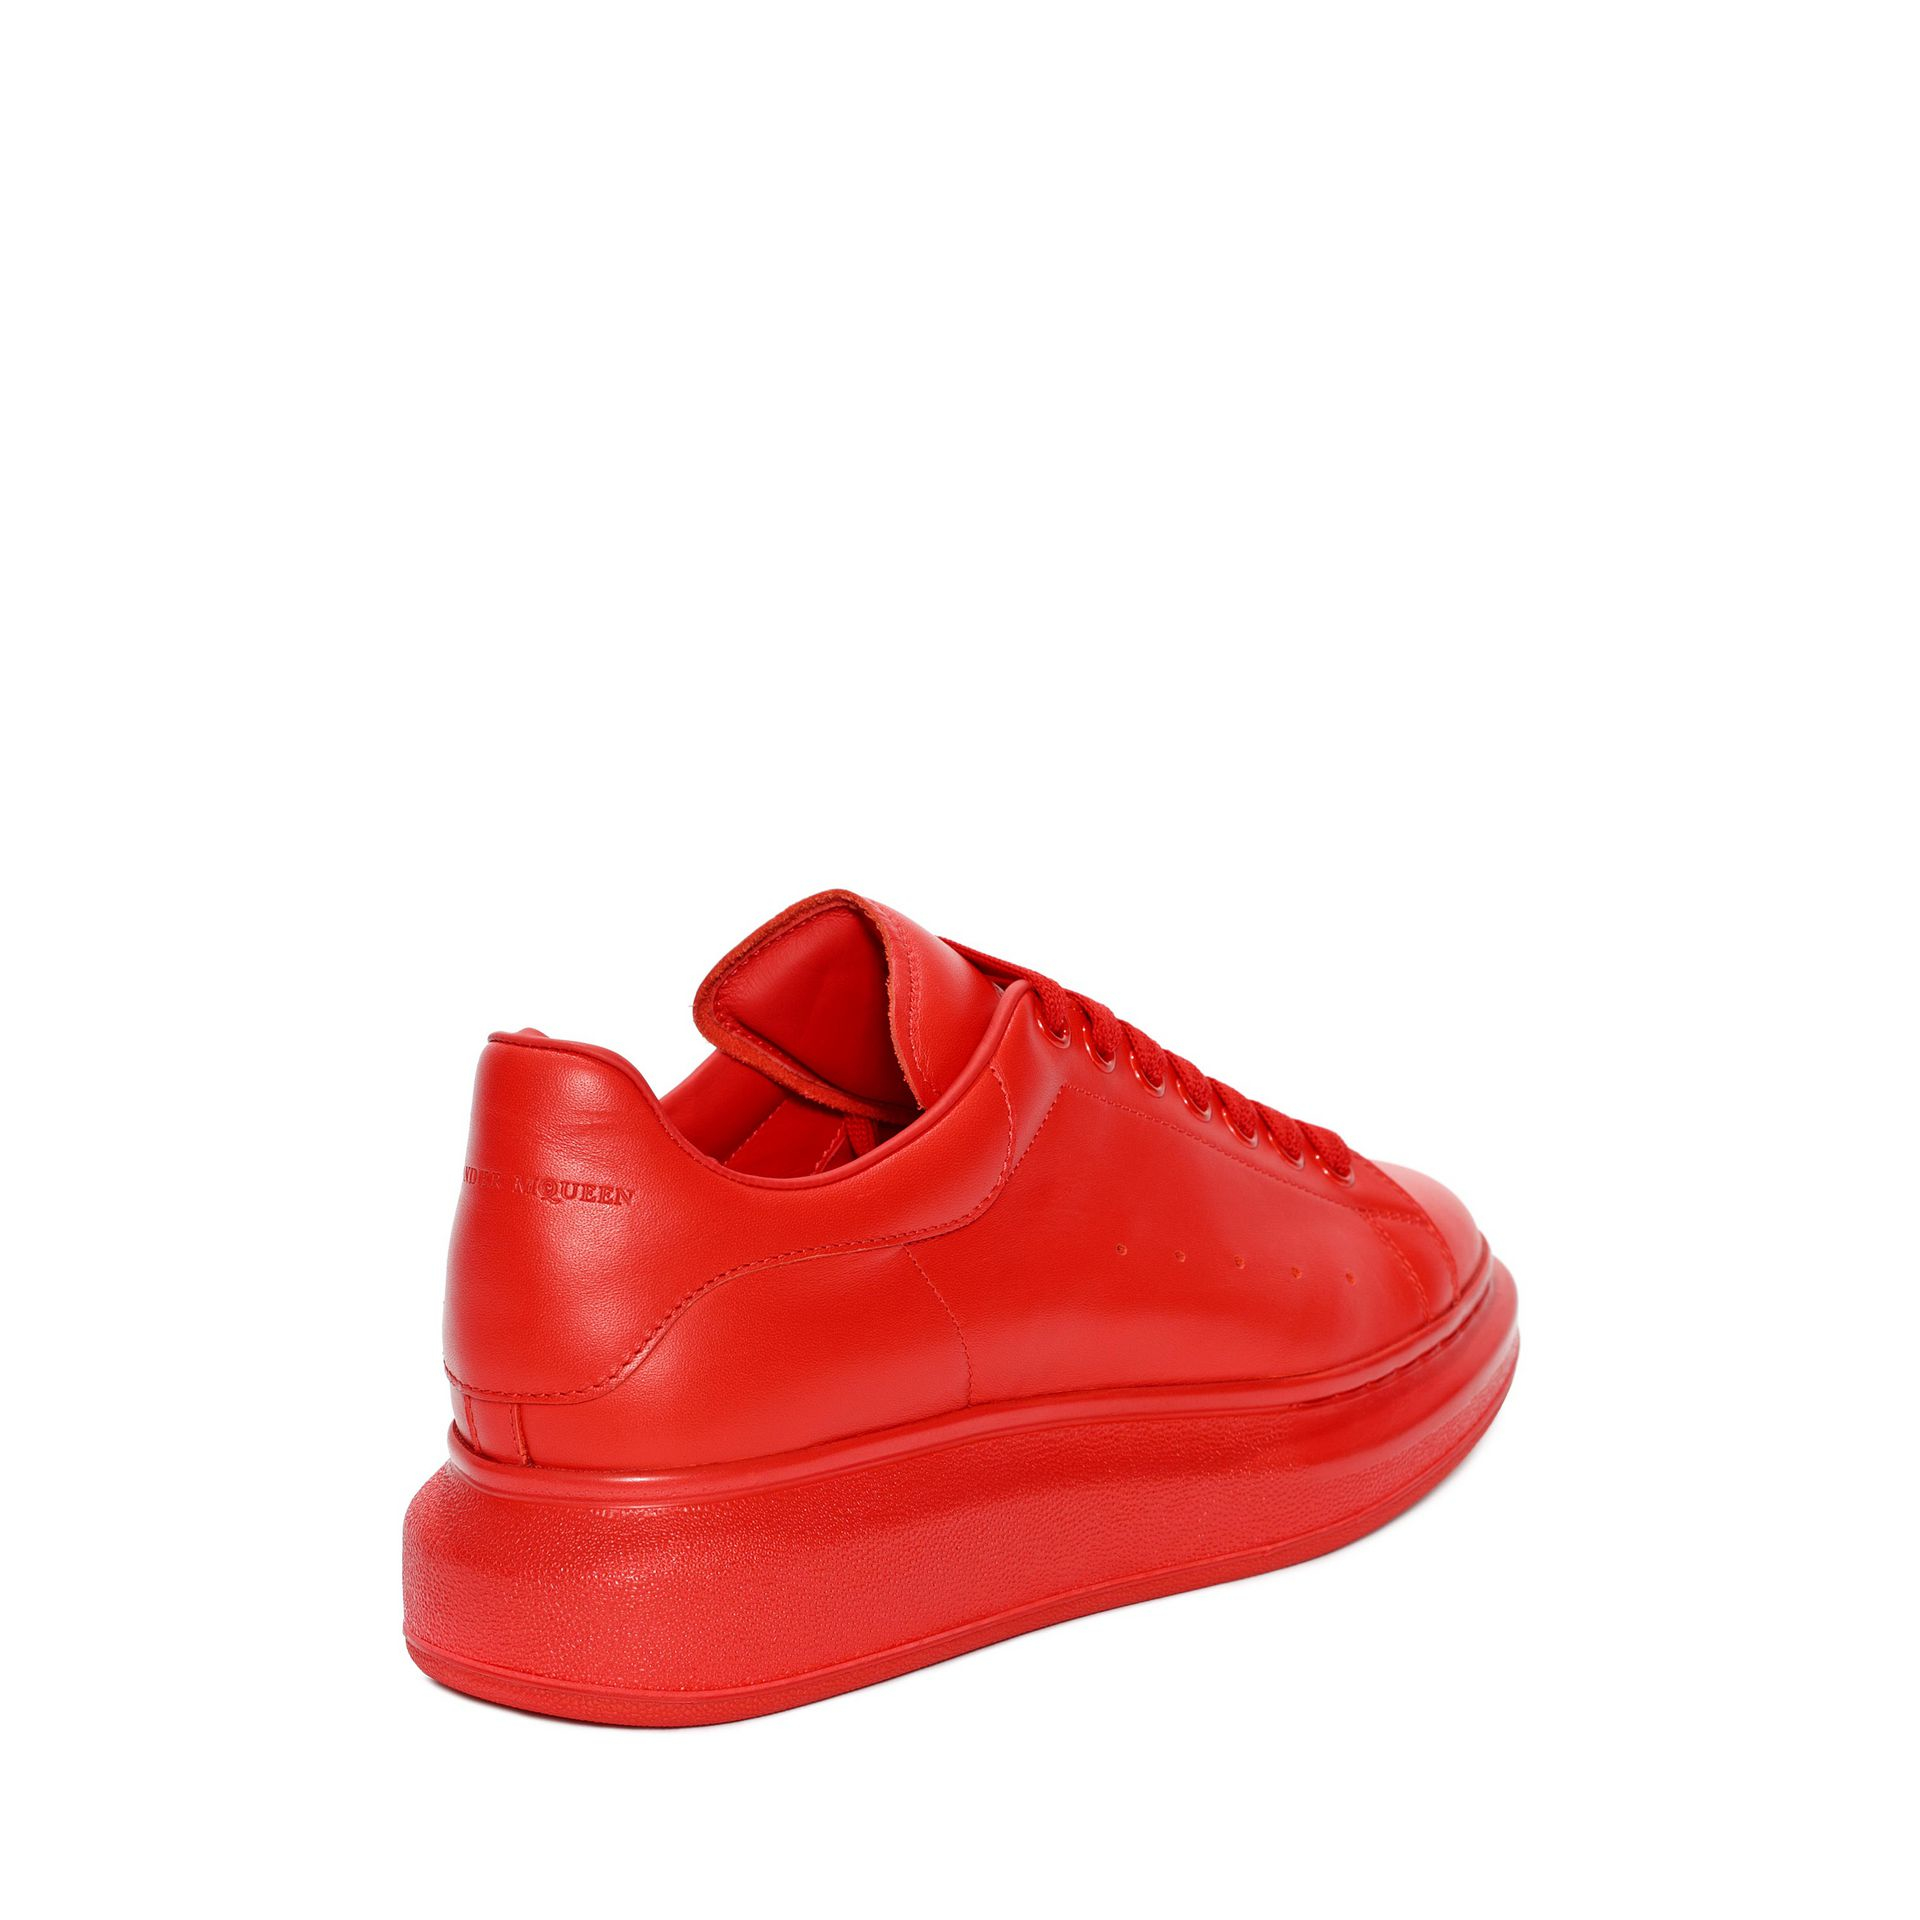 All Red Alexander Mcqueen Sneakers Deals, 60% OFF | empow-her.com